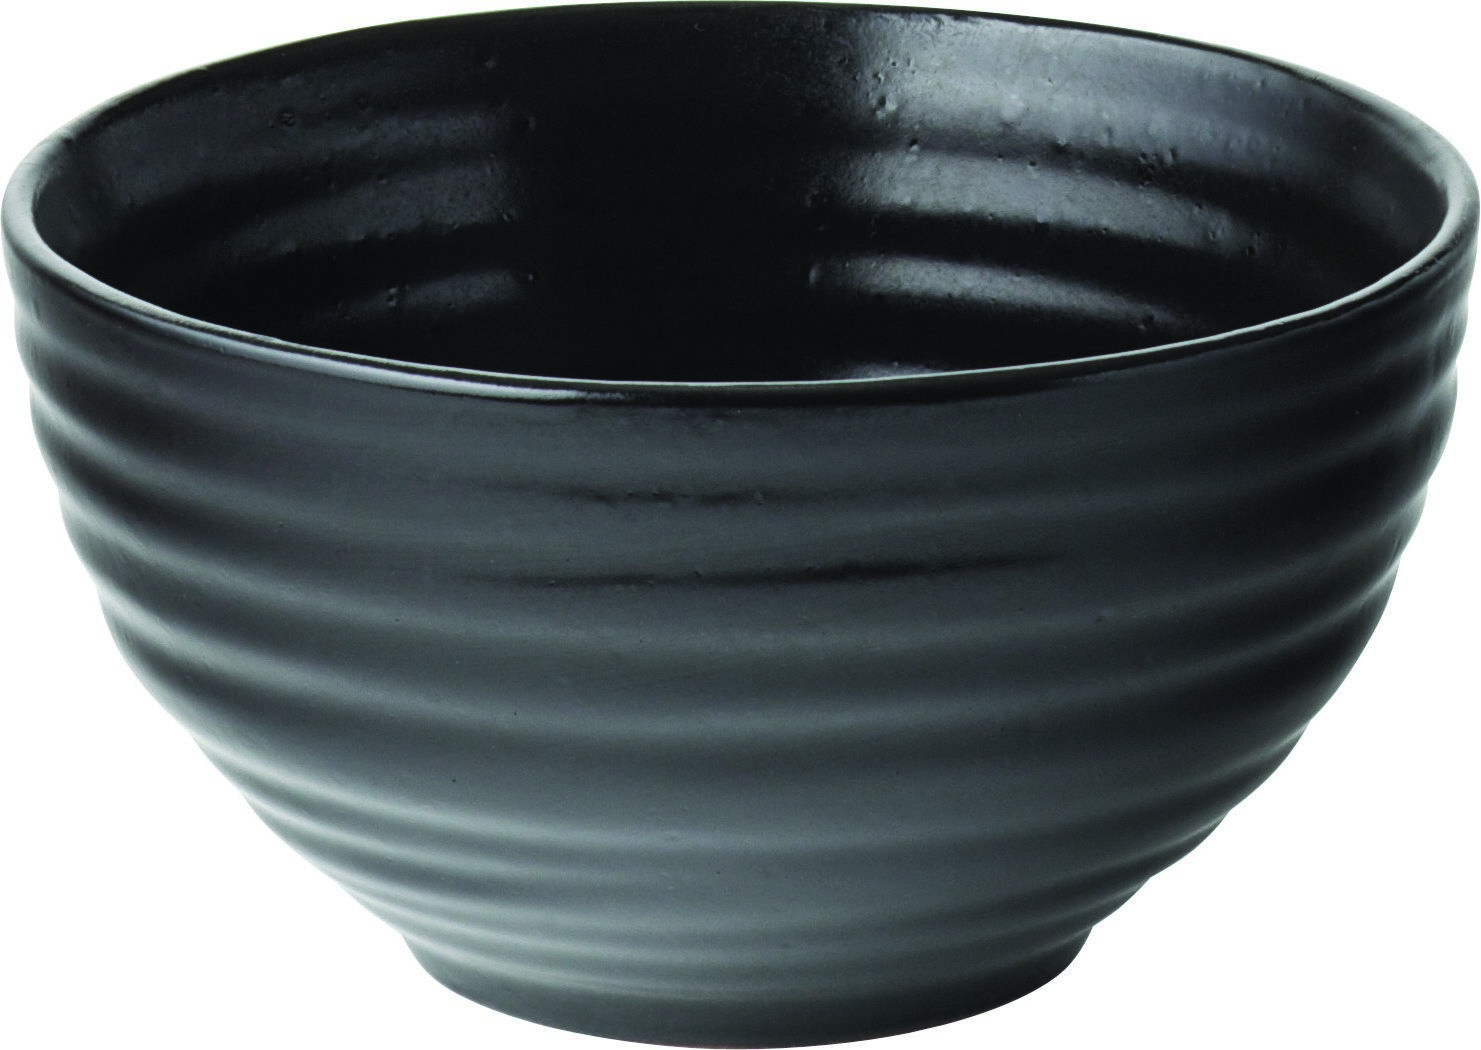 Tribeca Ebony Rice Bowl 8.5oz (24cl) - CT0014-000000-B01006 (Pack of 6)